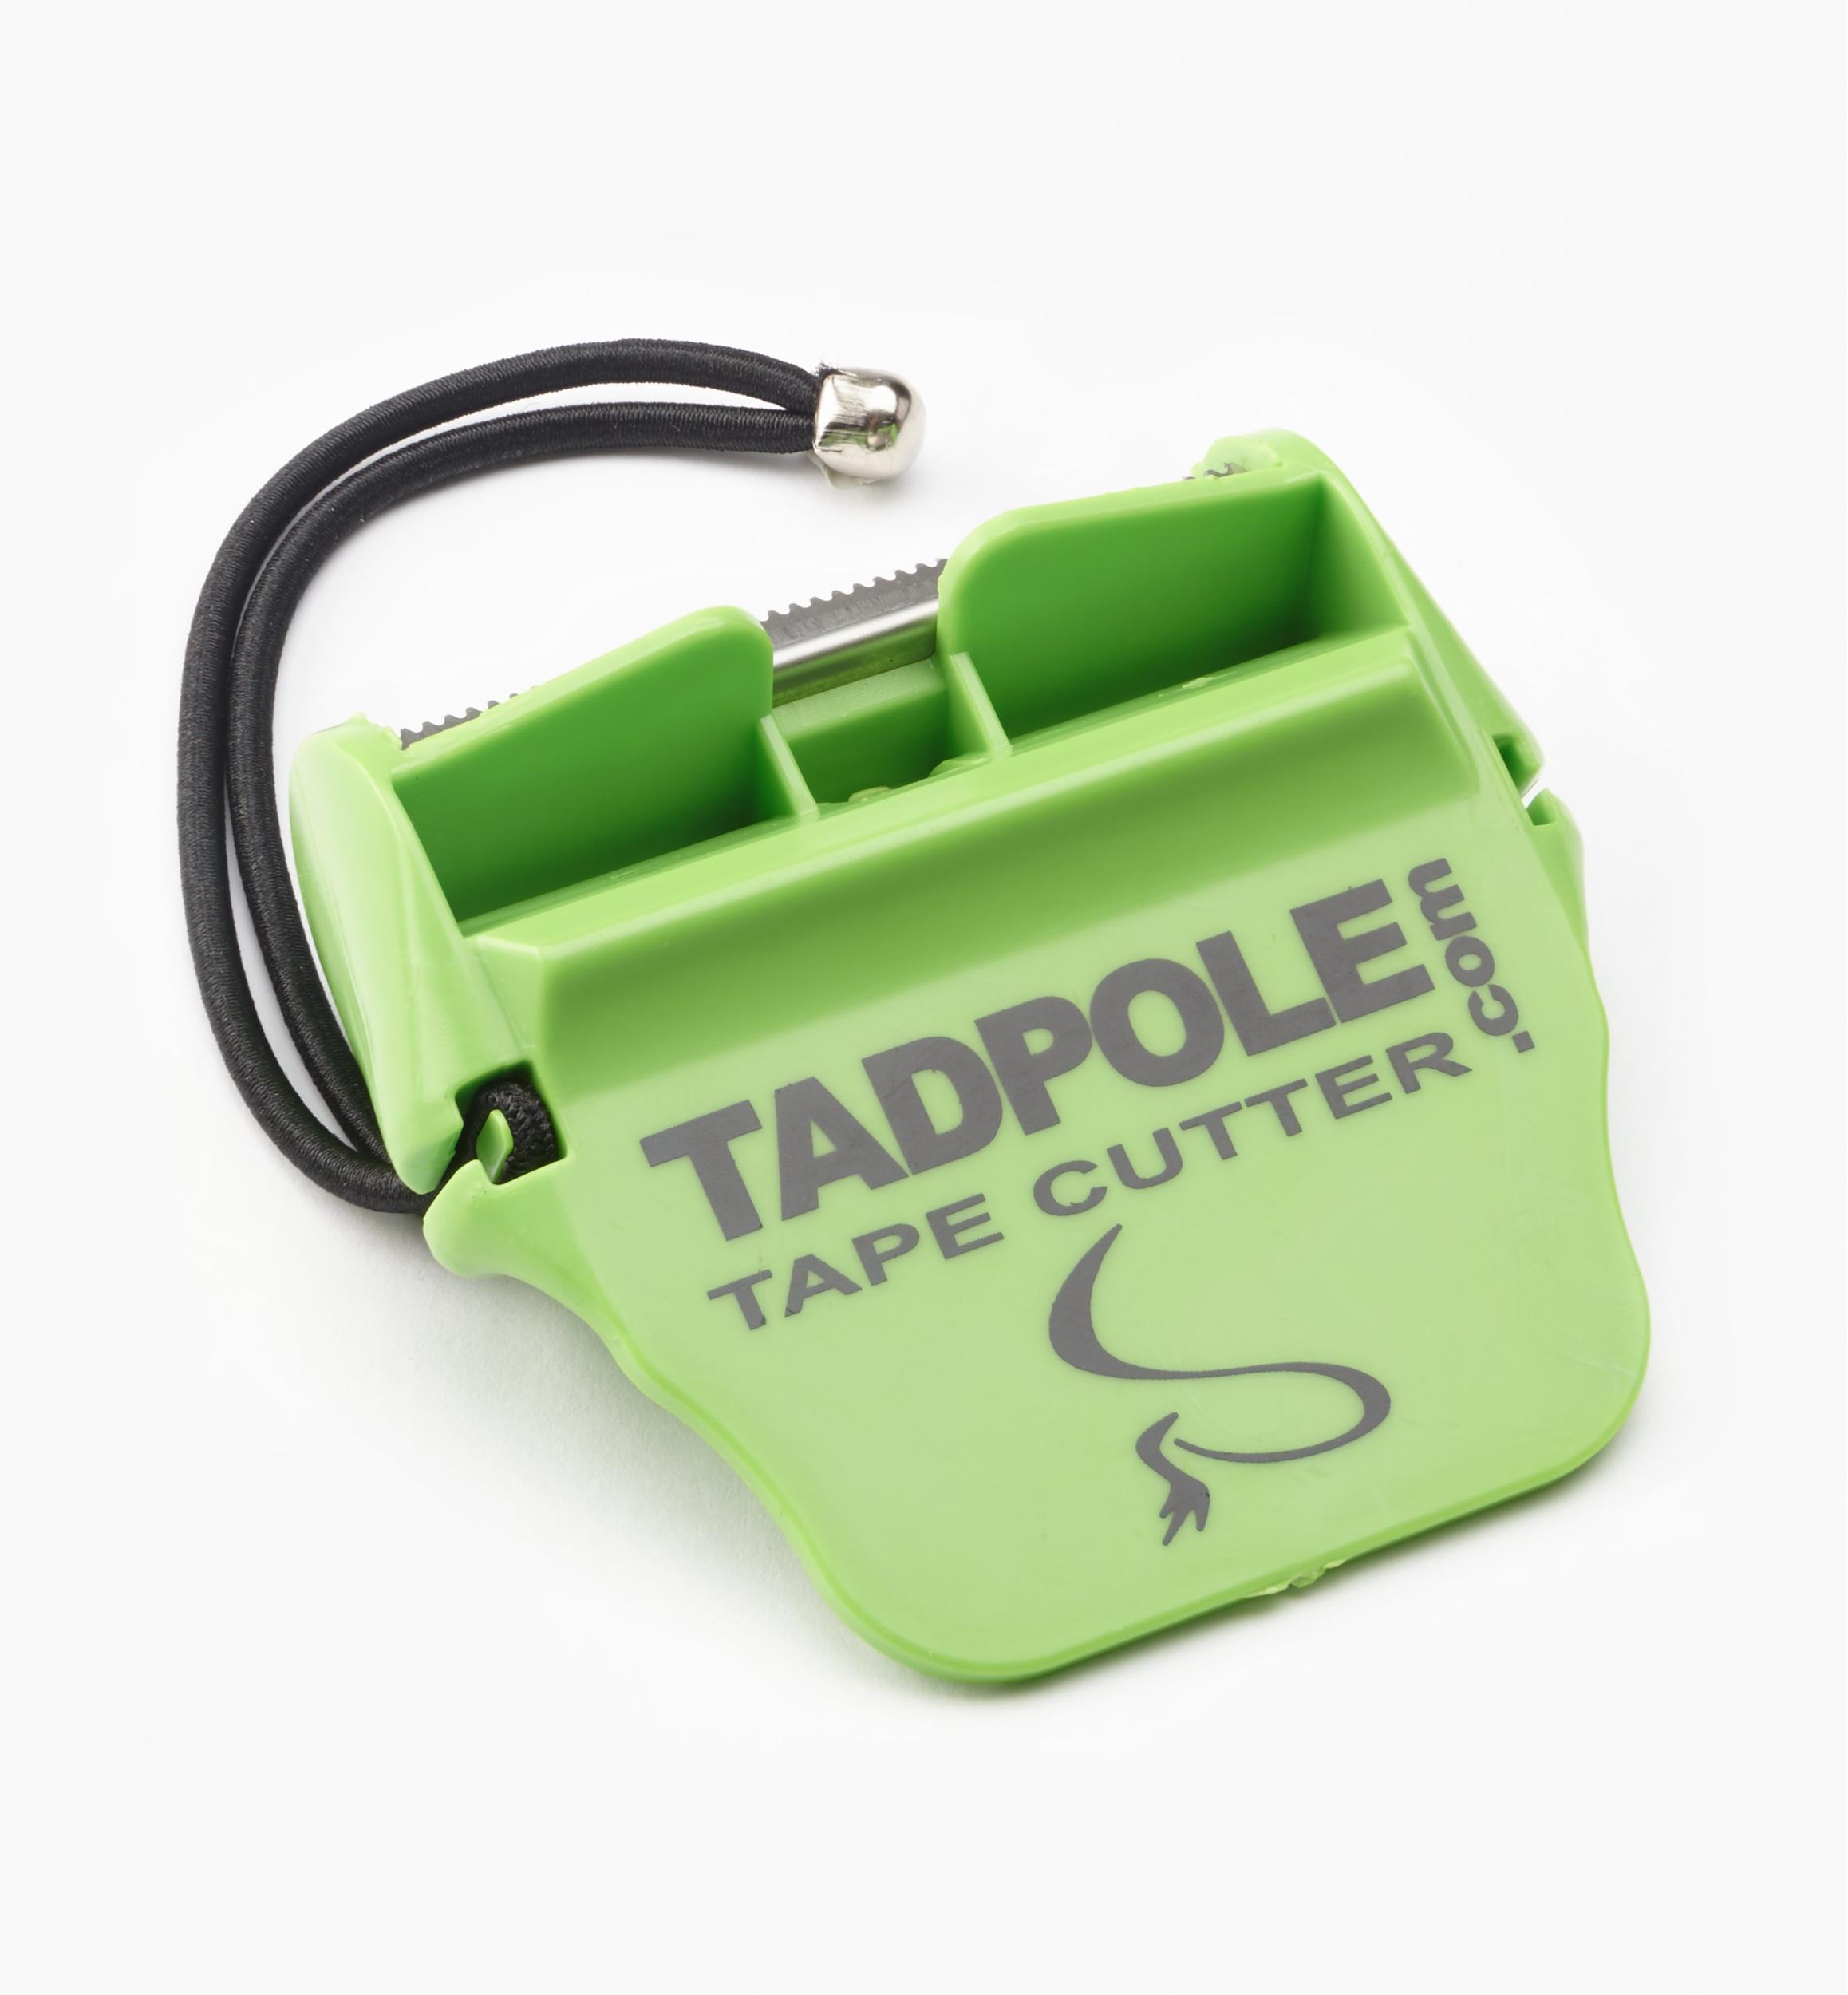 Tadpole  2 in W x 2 inch  L Tape Cutter  Green 